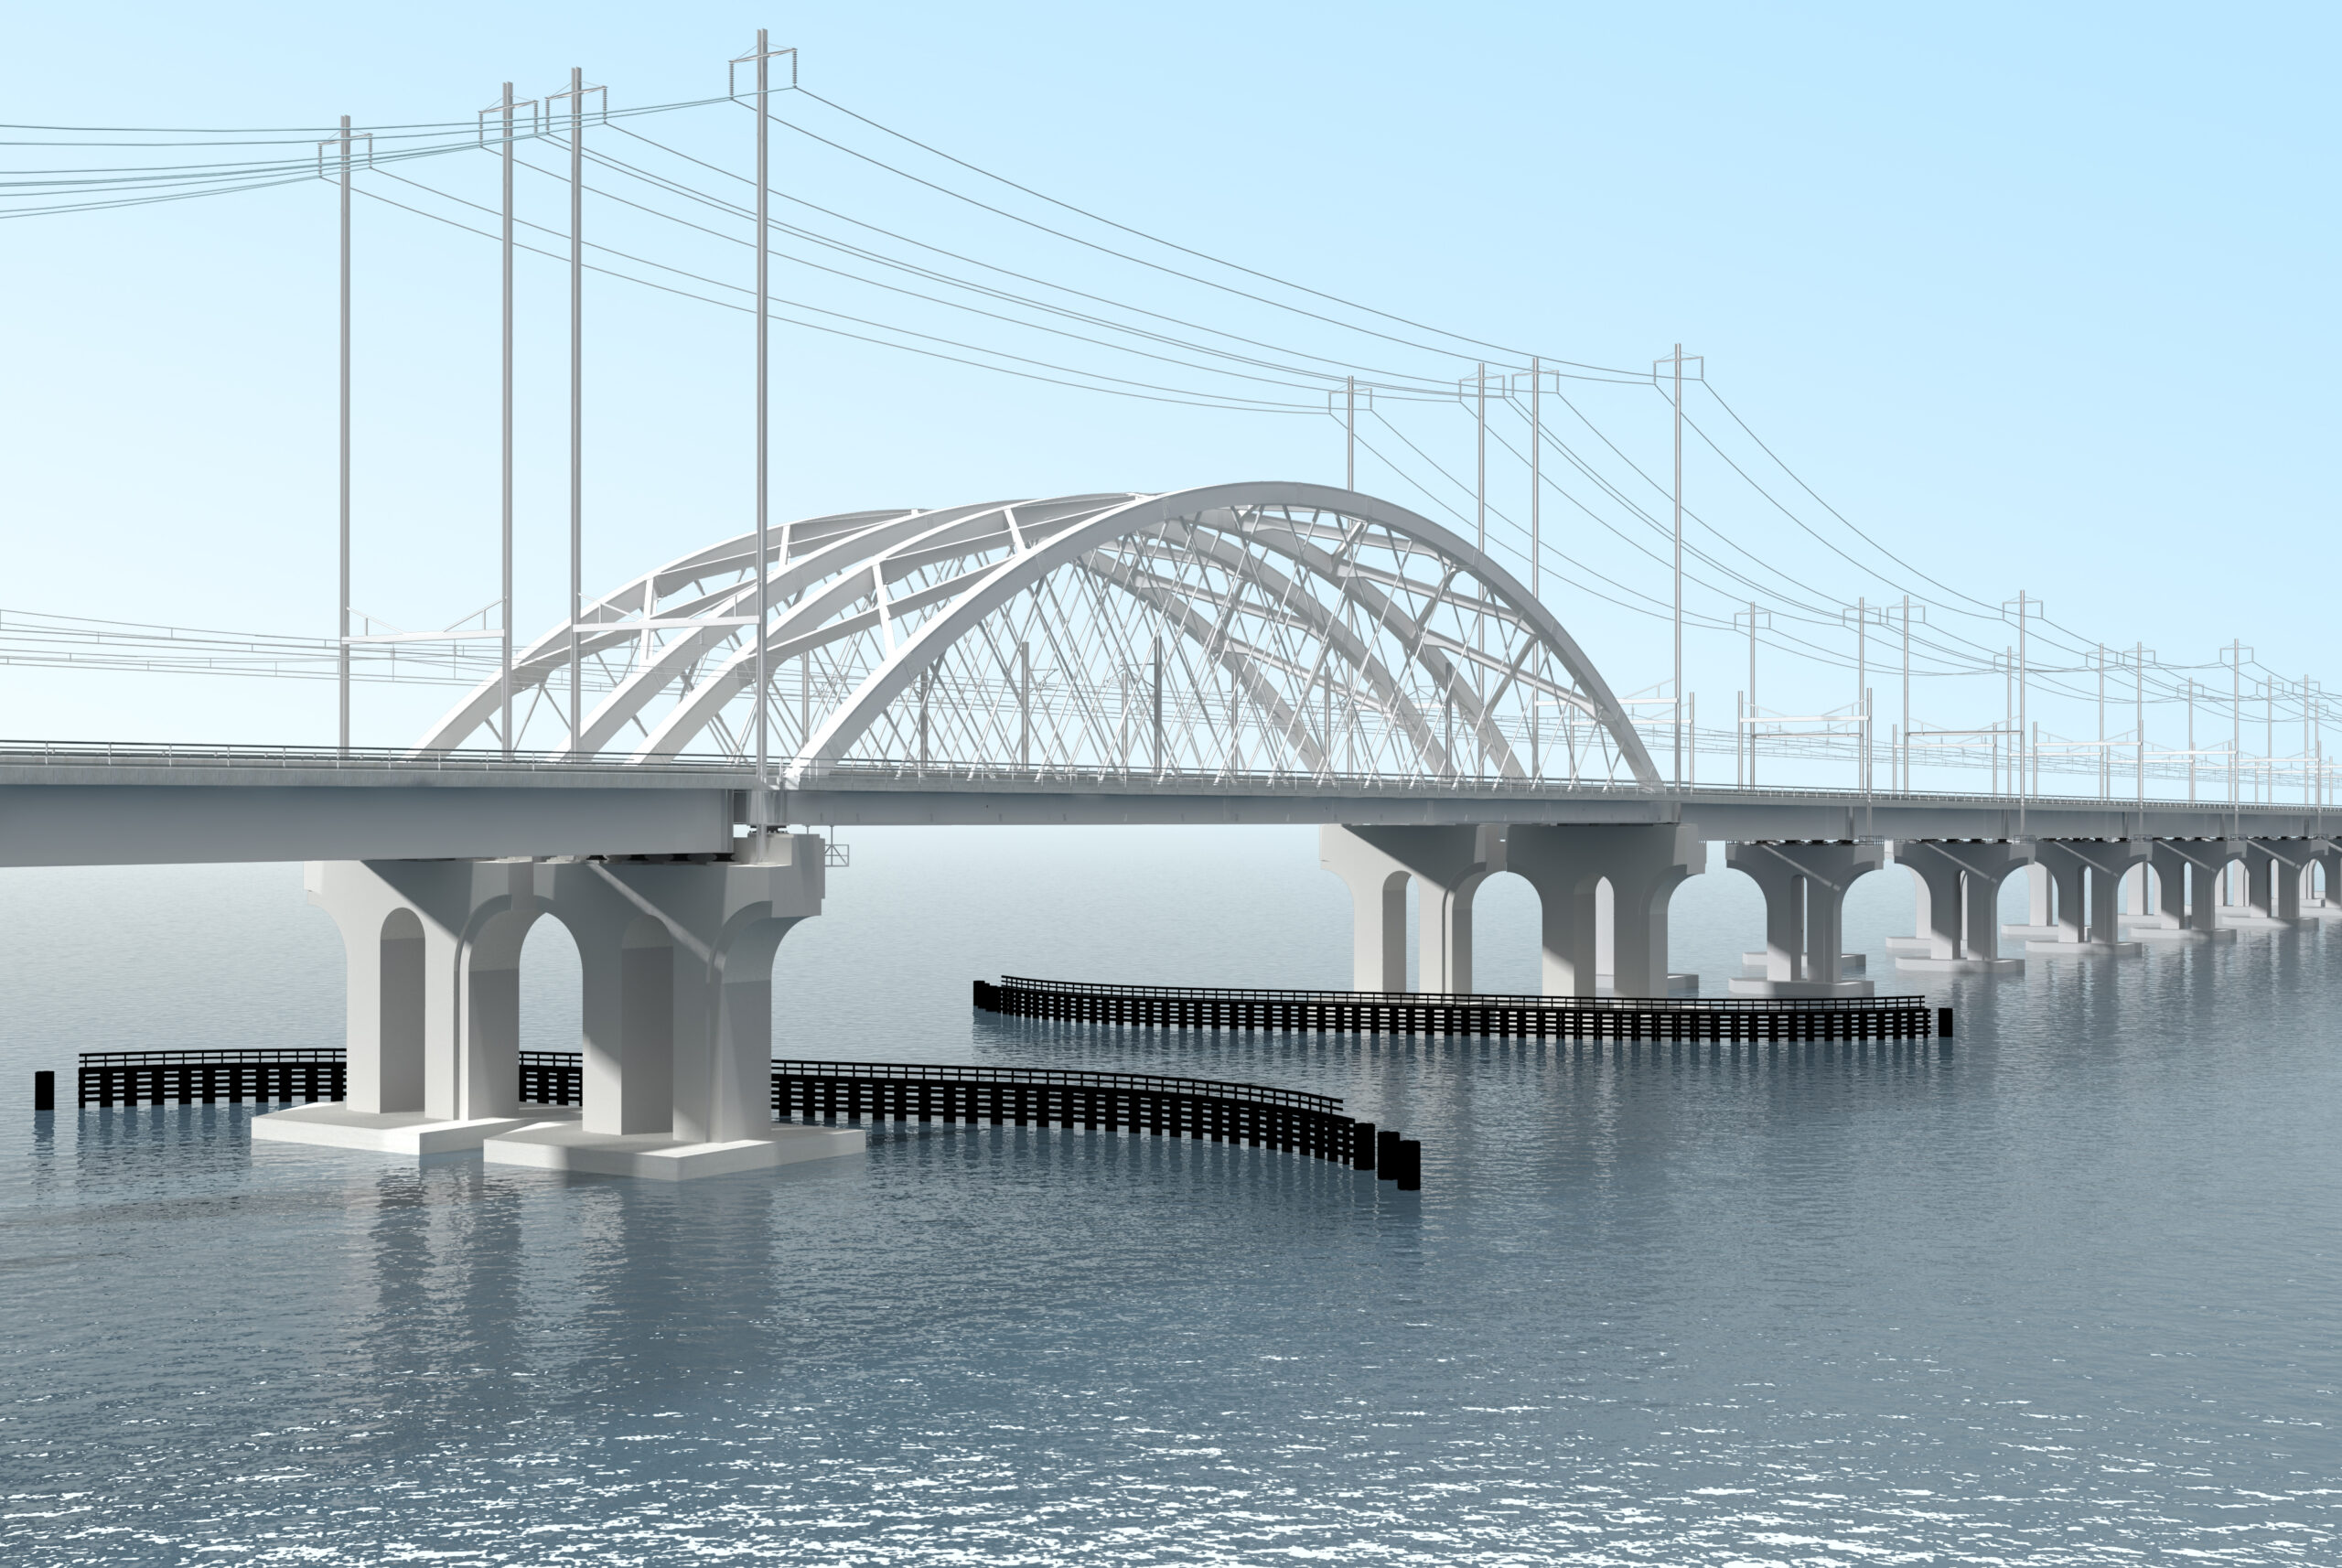 The new Susquehanna River Bridge